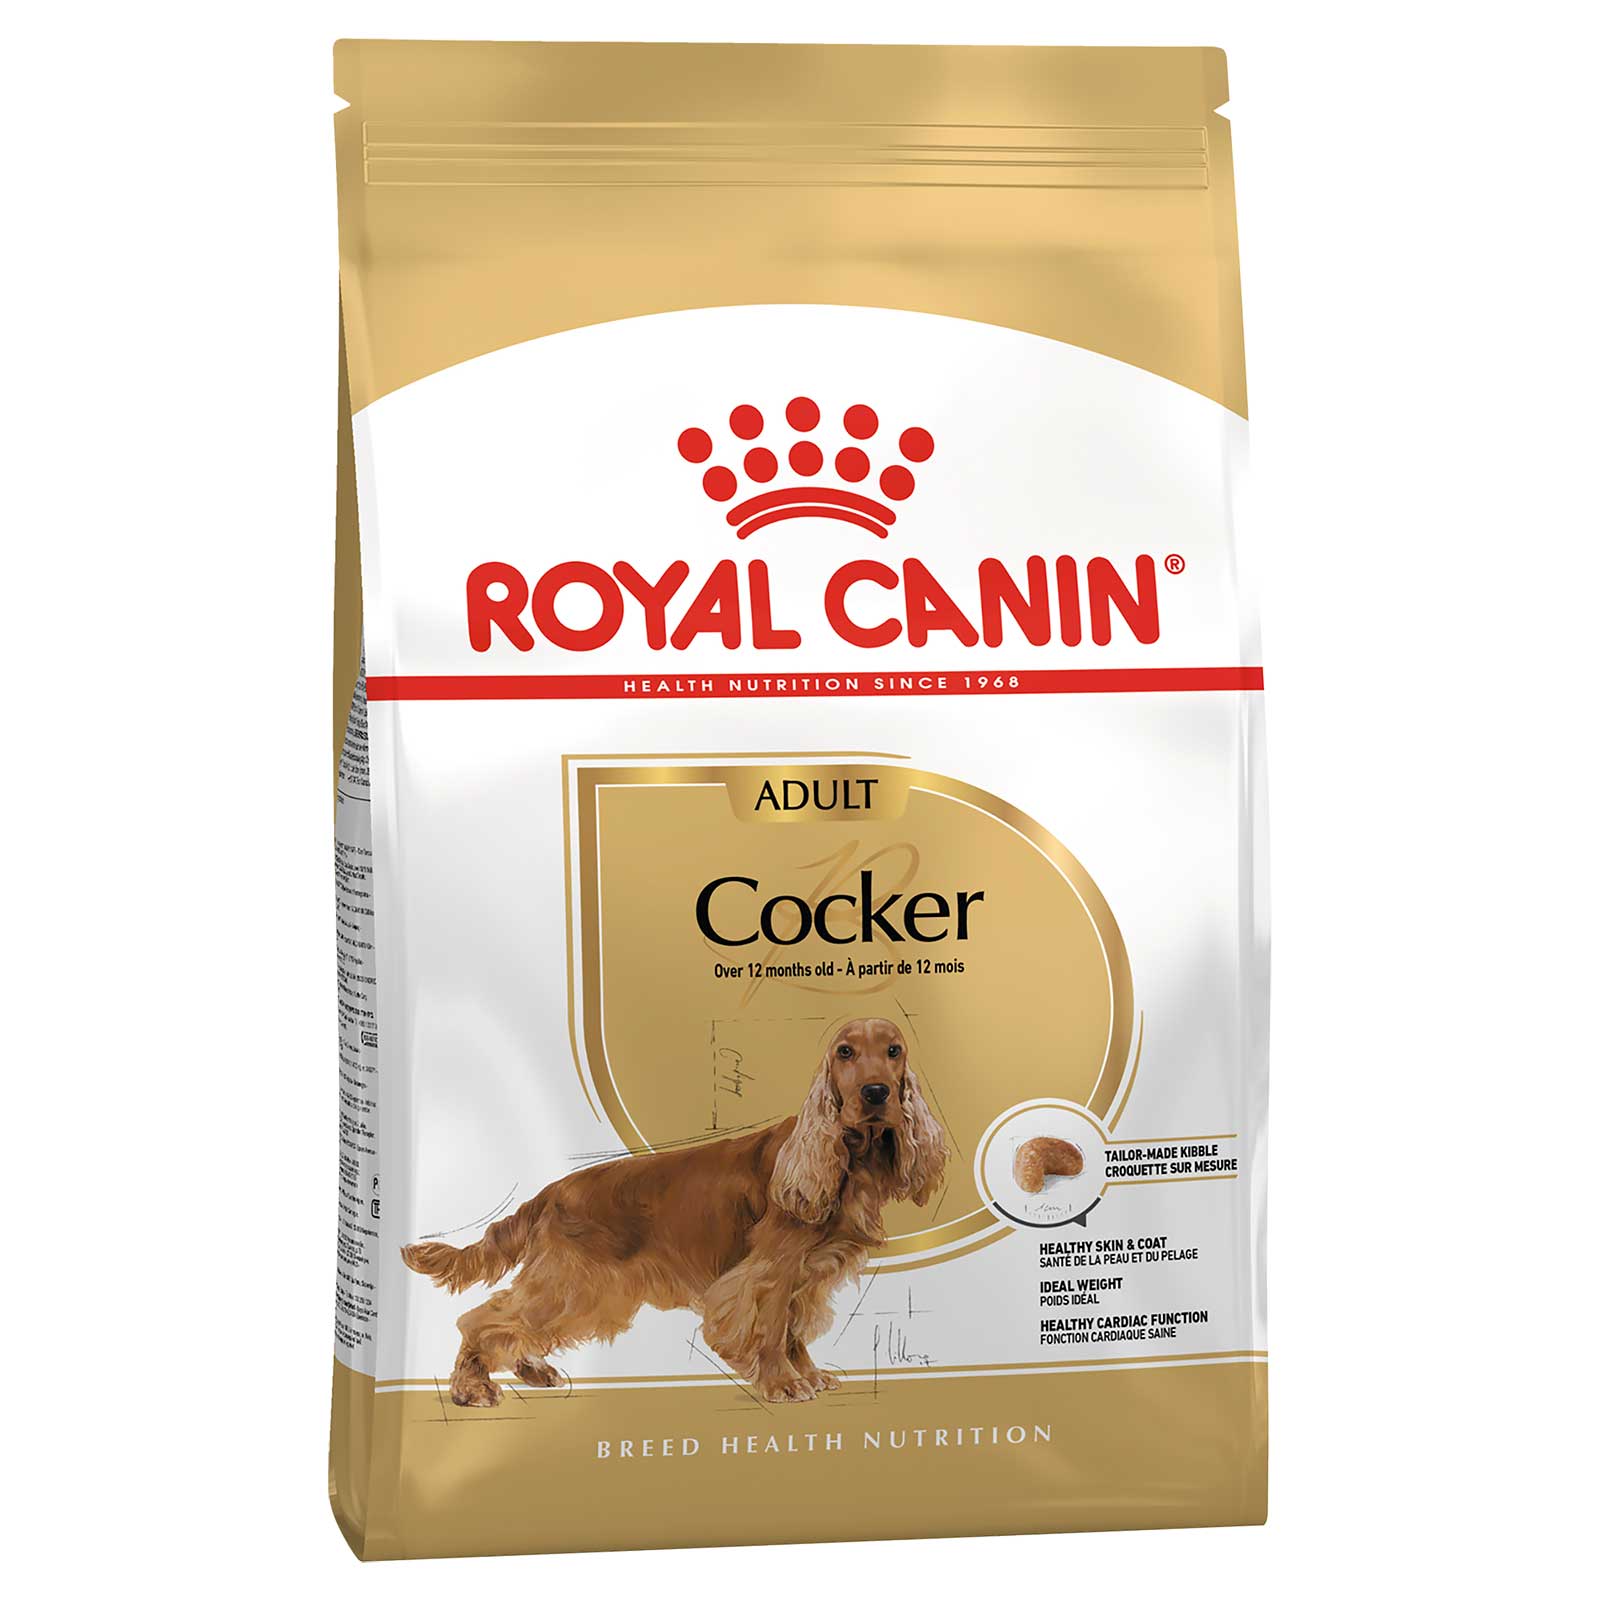 Royal Canin Dog Food Adult Cocker Spaniel